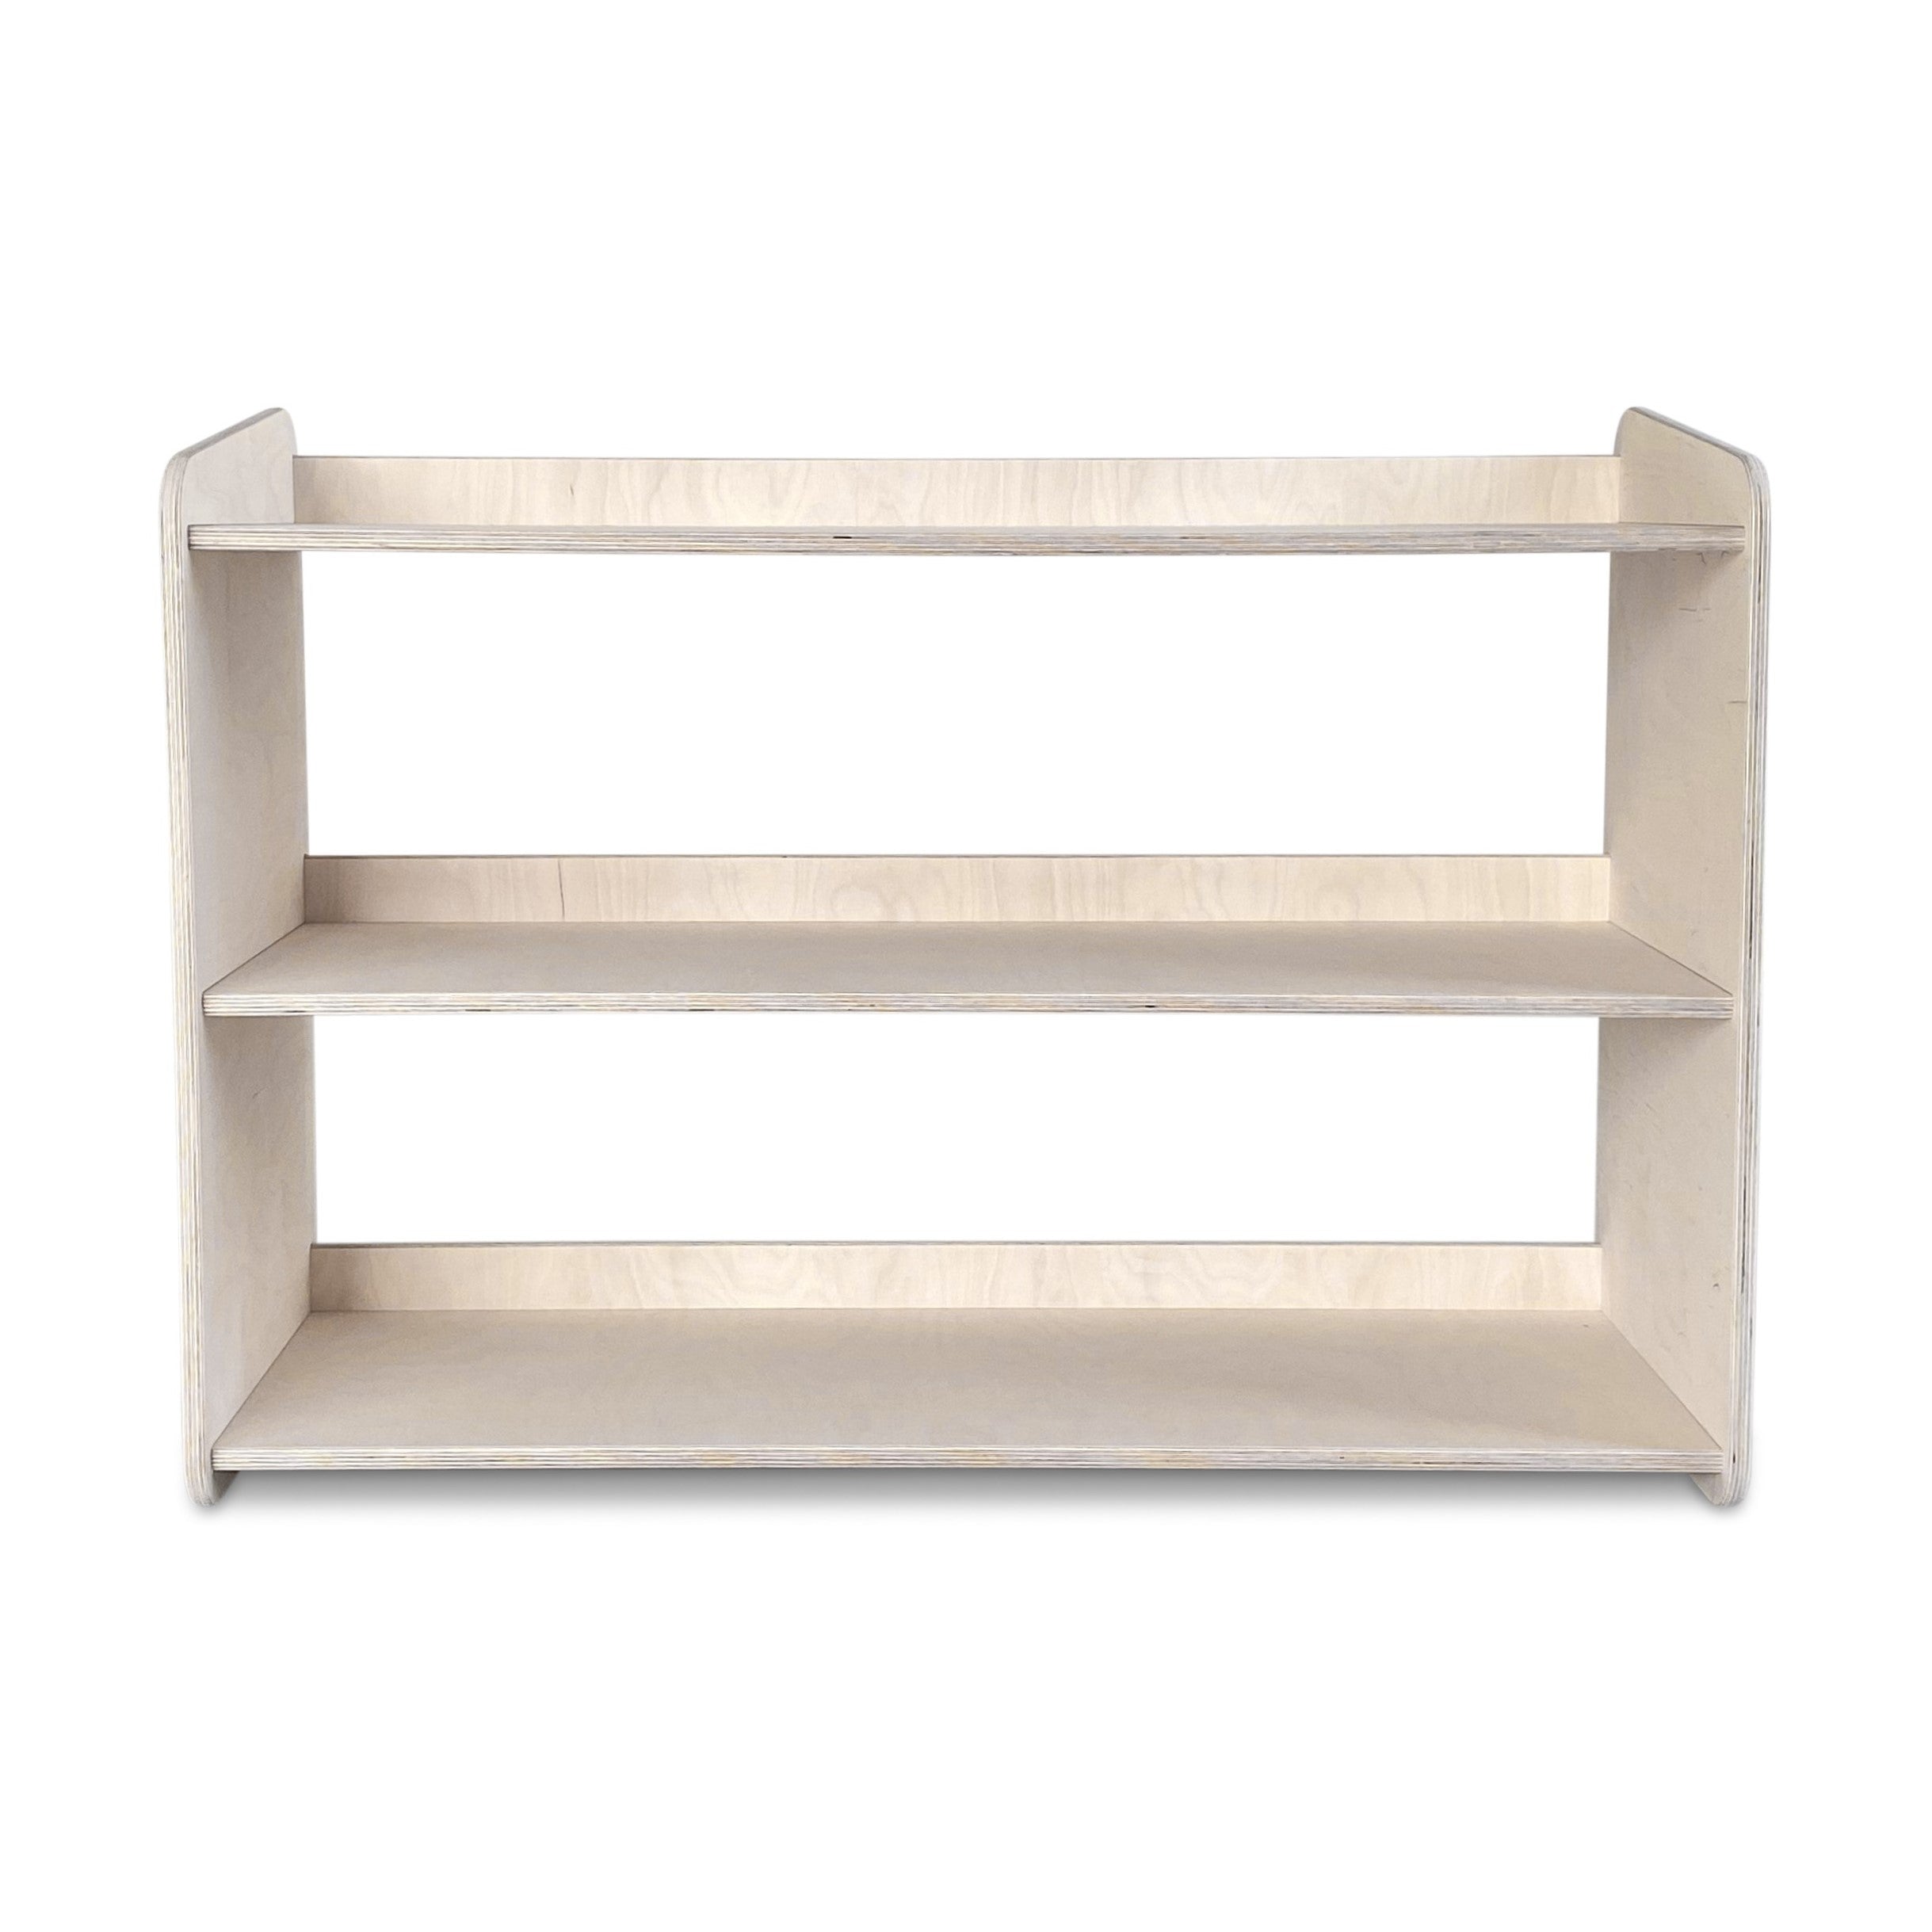 Montessori toy cabinet | Bookshelf 3 shelves - natural